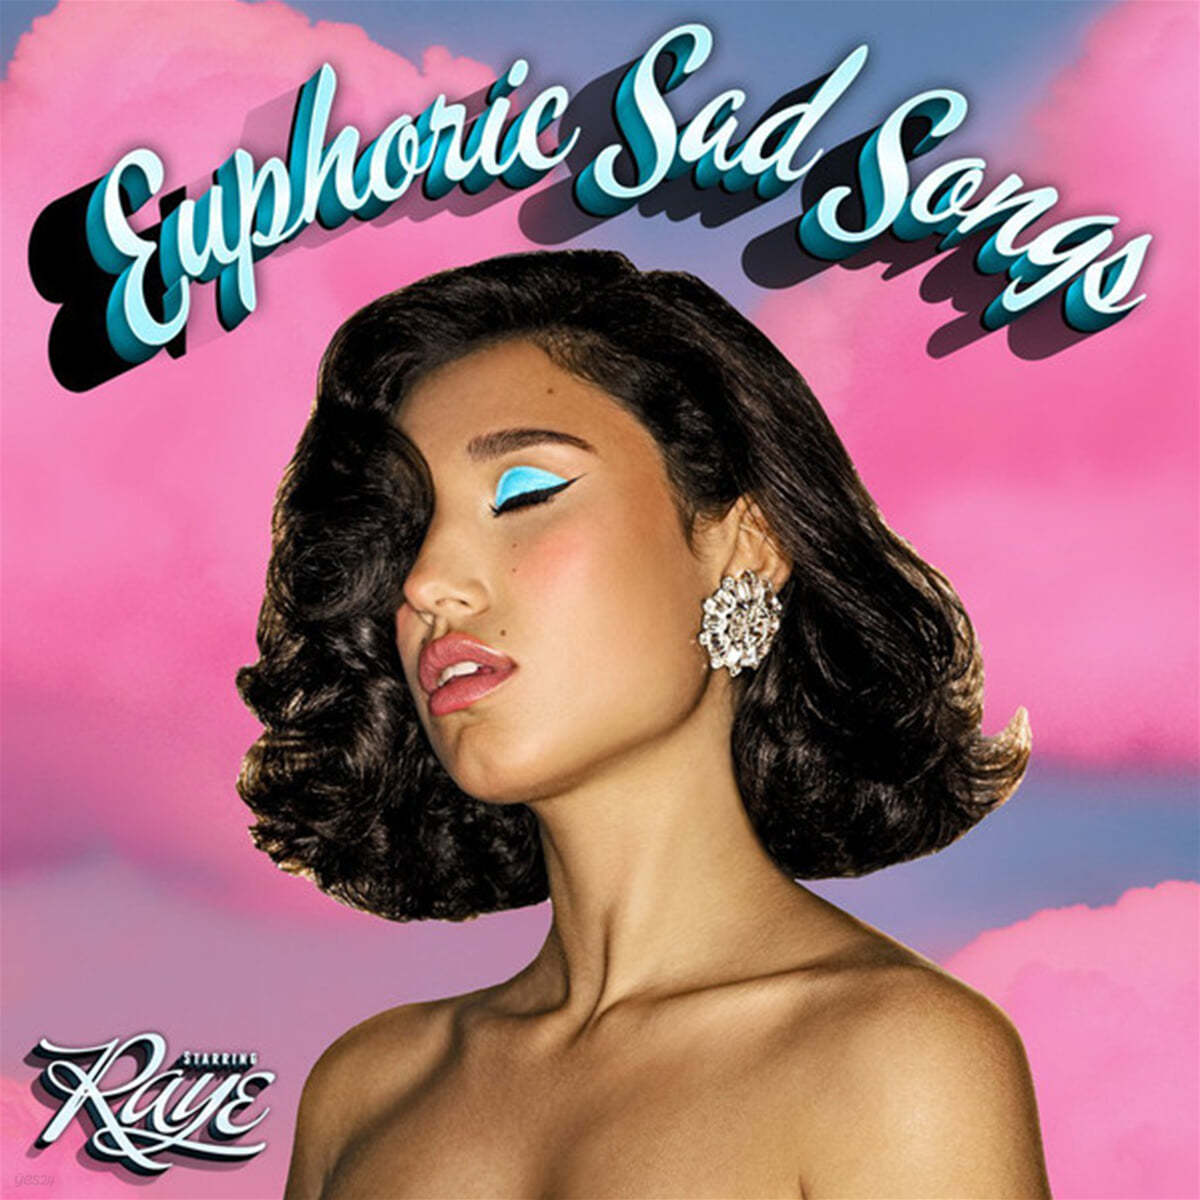 Raye (레이) - Euphoric Sad Songs [핑크 컬러 LP] 